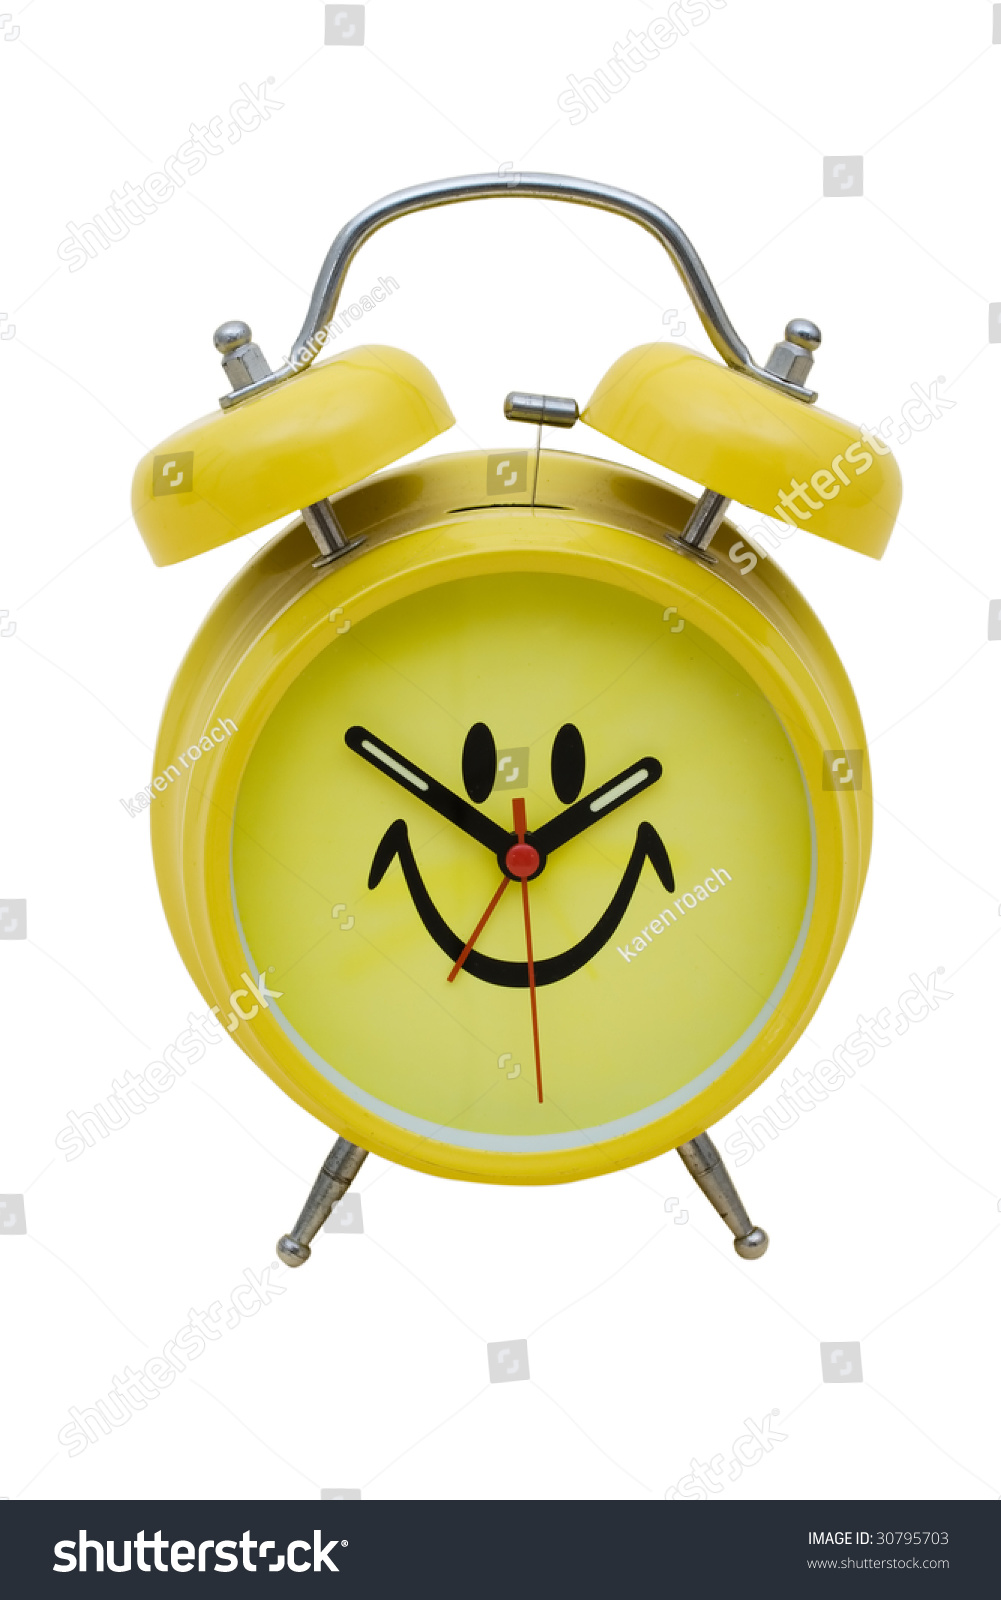 Happy Face Alarm Clock On White Background, Alarm Clock Stock Photo ...